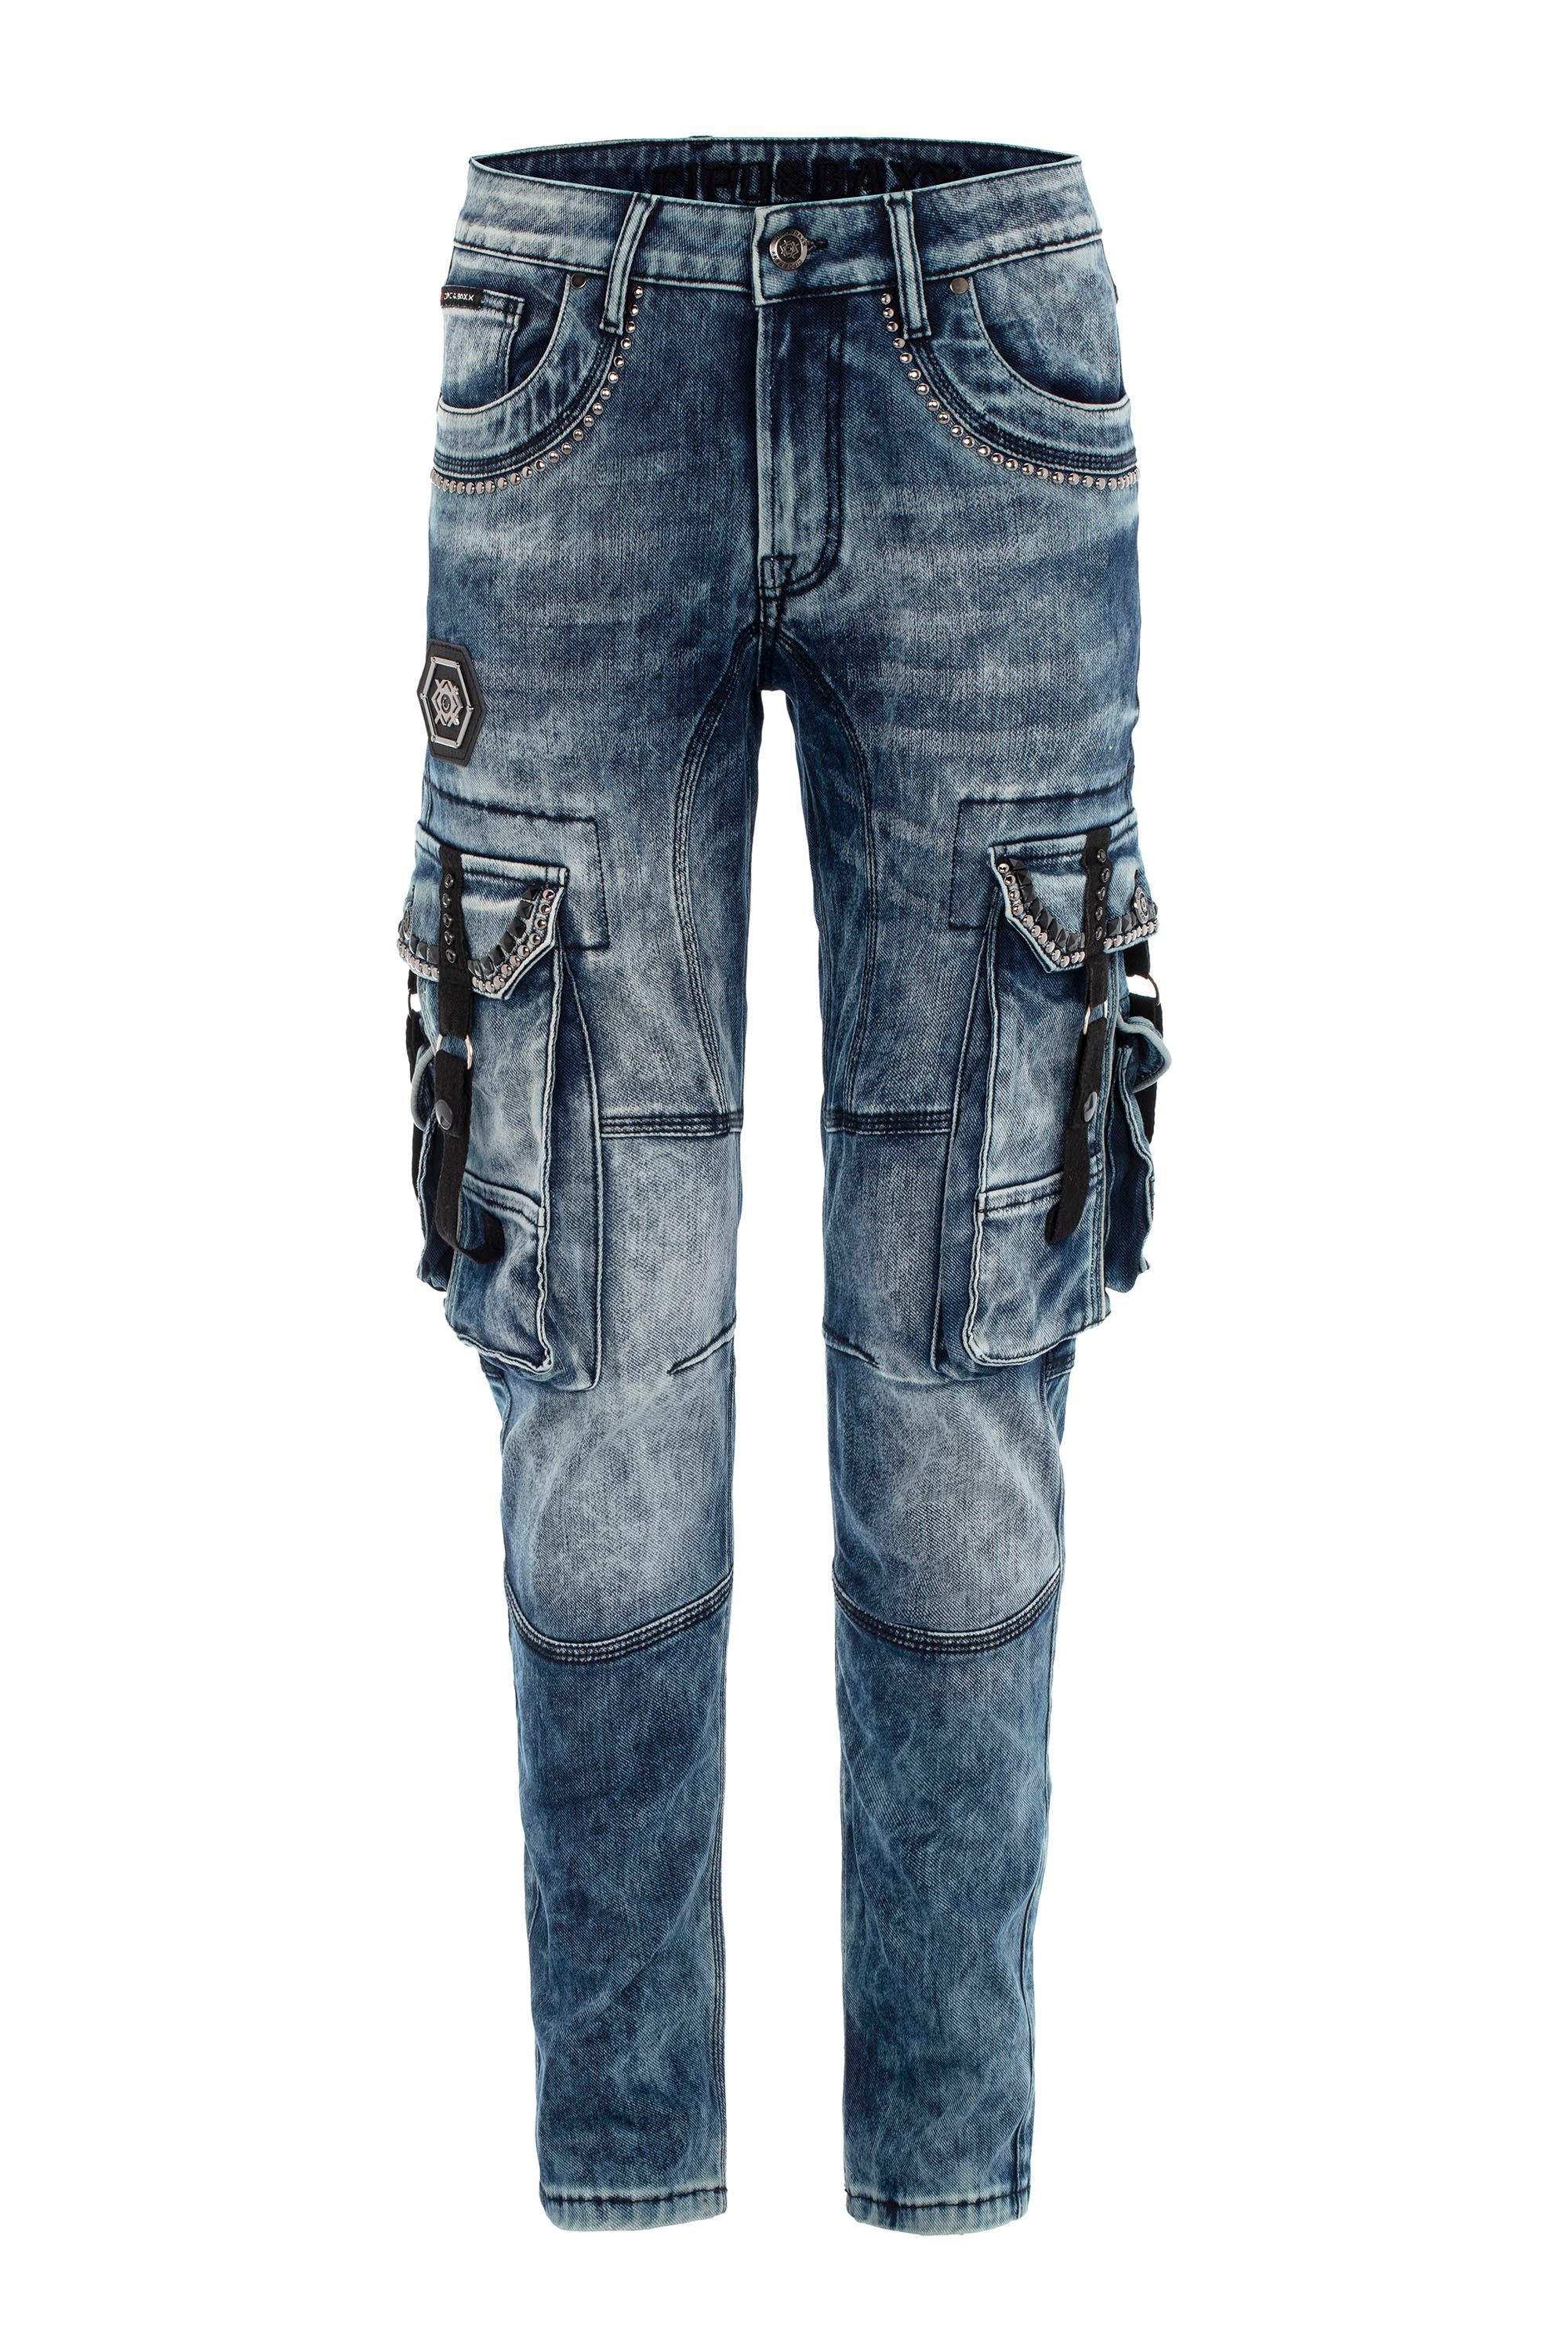 Baxx mit coolen & Cipo Bequeme Jeans Cargotaschen